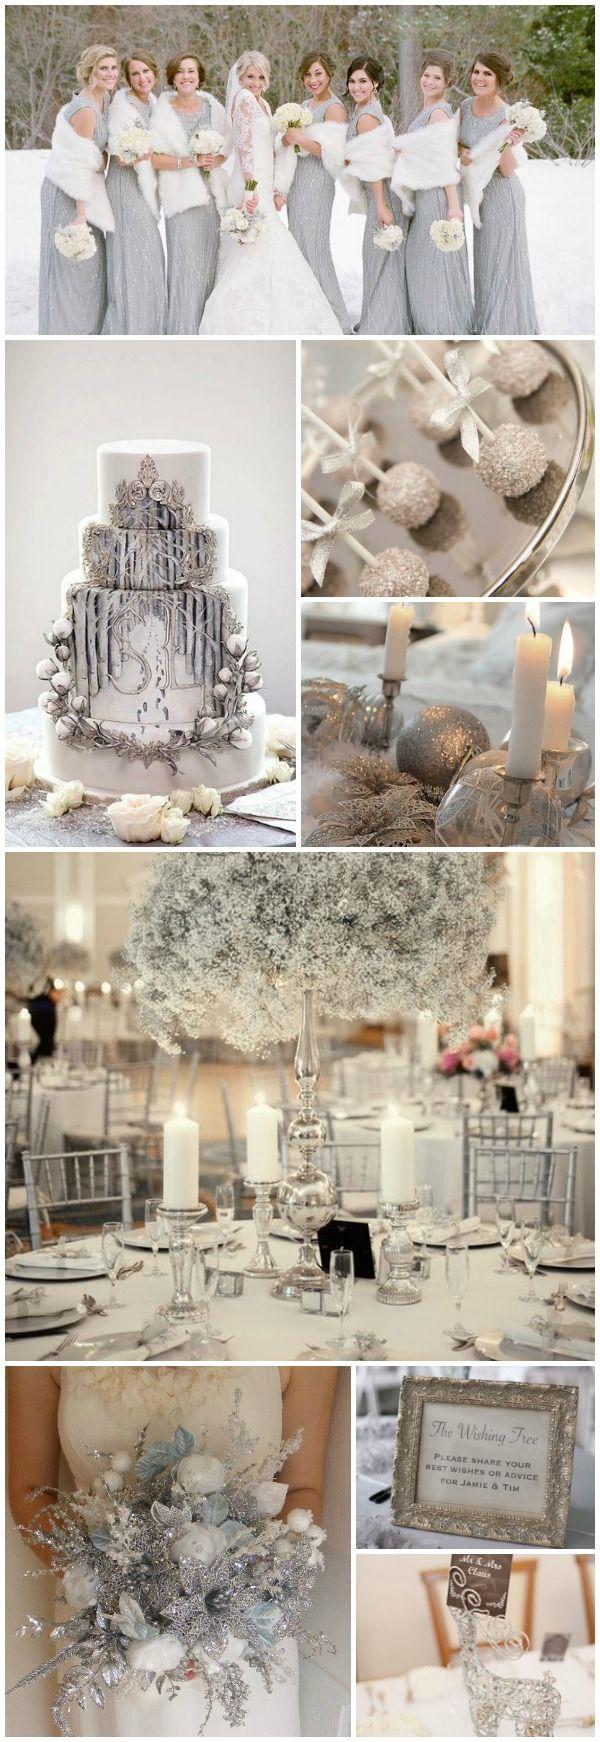 زفاف - Top 6 Incredible Winter Wonderland Wedding Decorations Ideas